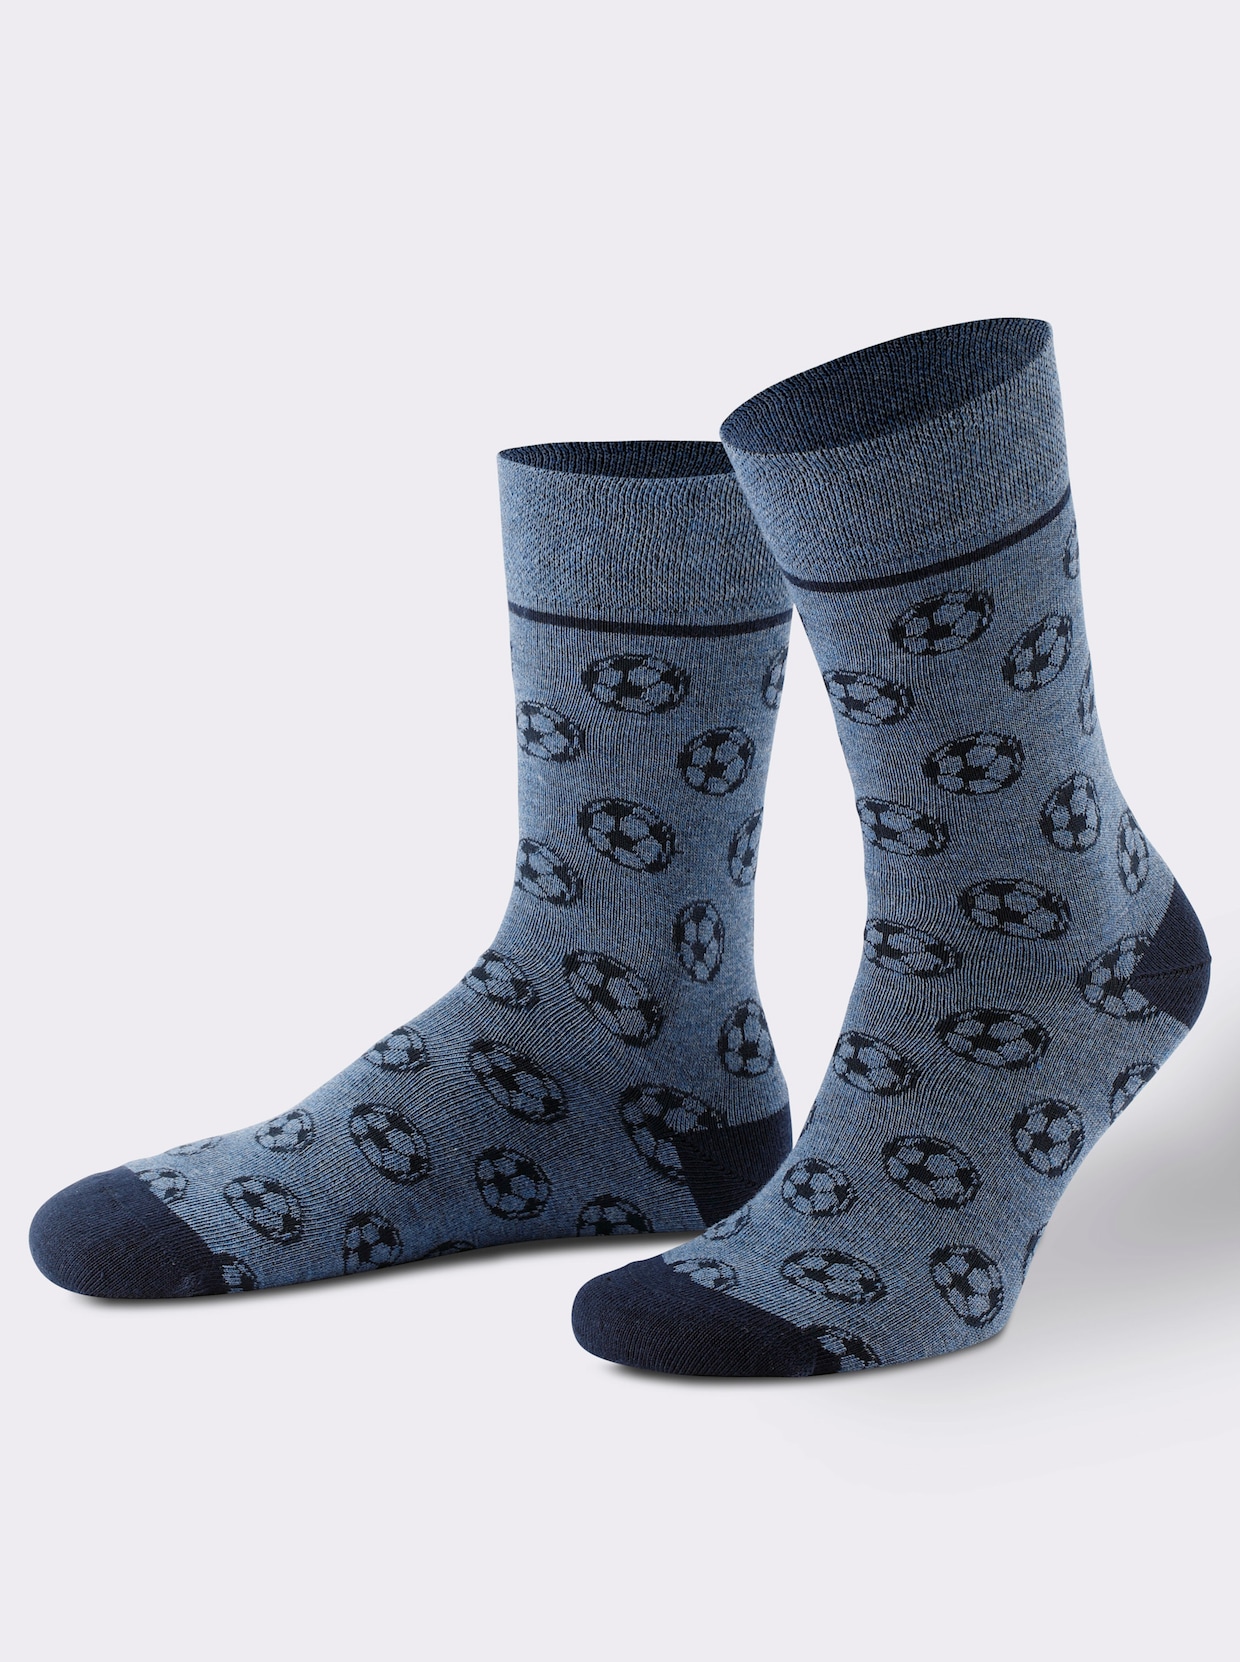 wäschepur men Herren-Socken - 2x jeansblau-marine-gemustert + 2x jeansblau-kiwi